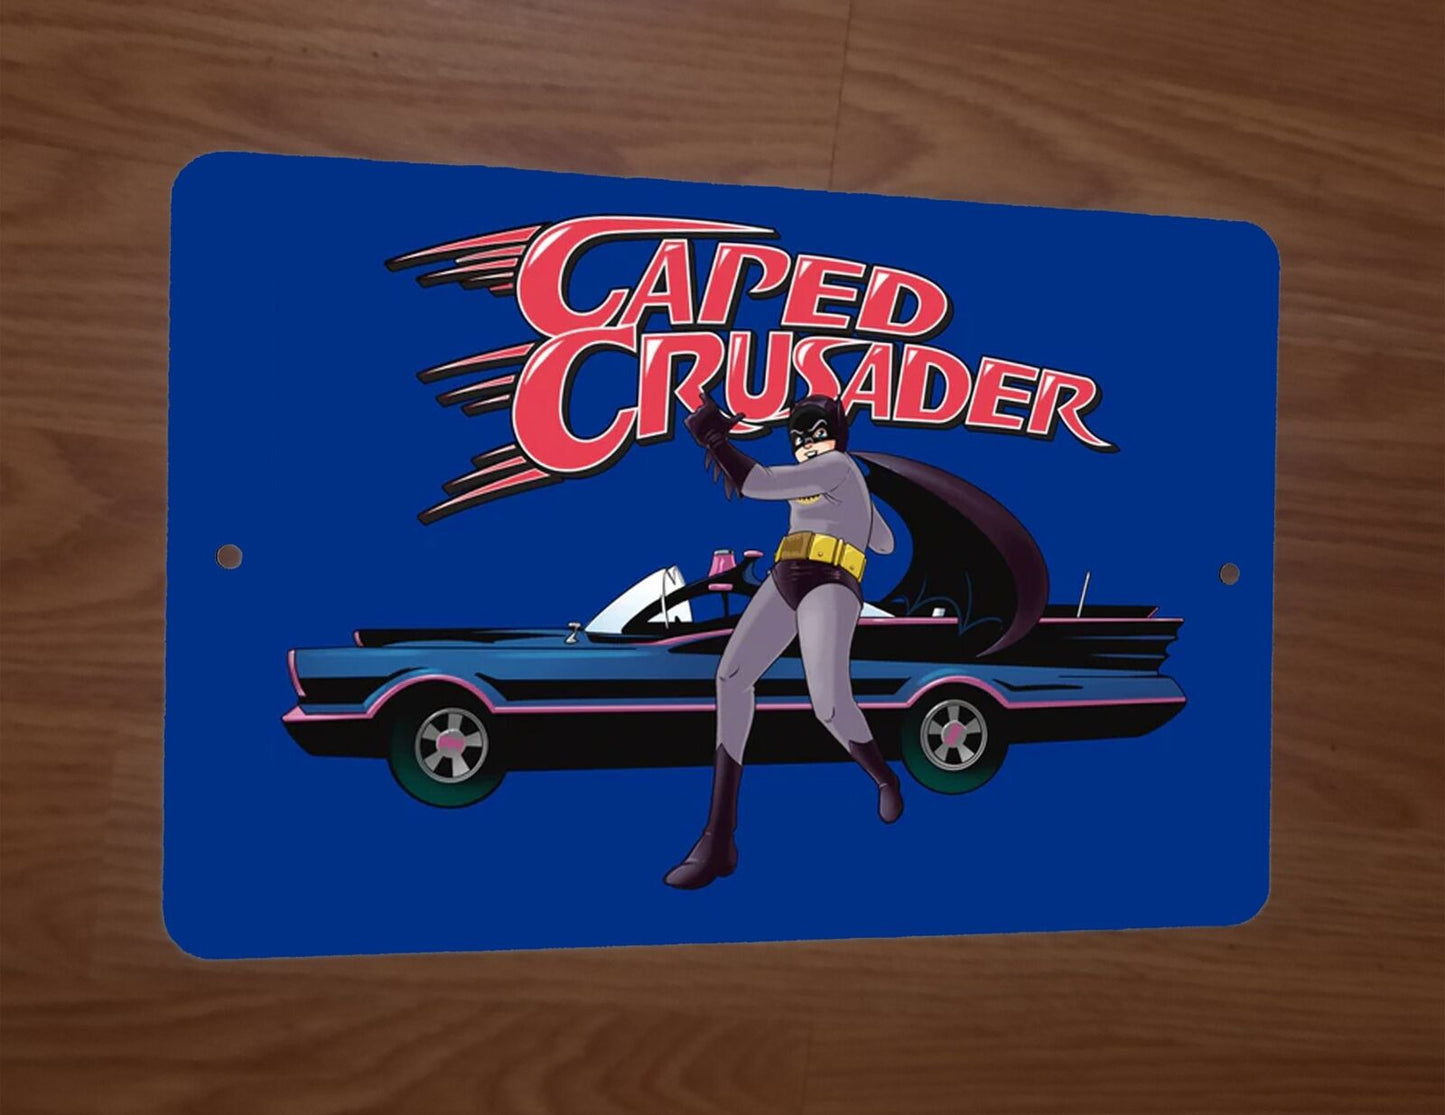 Caped Crusader Batgirl Speed Racer Parody Art 8x12 Metal Wall Sign